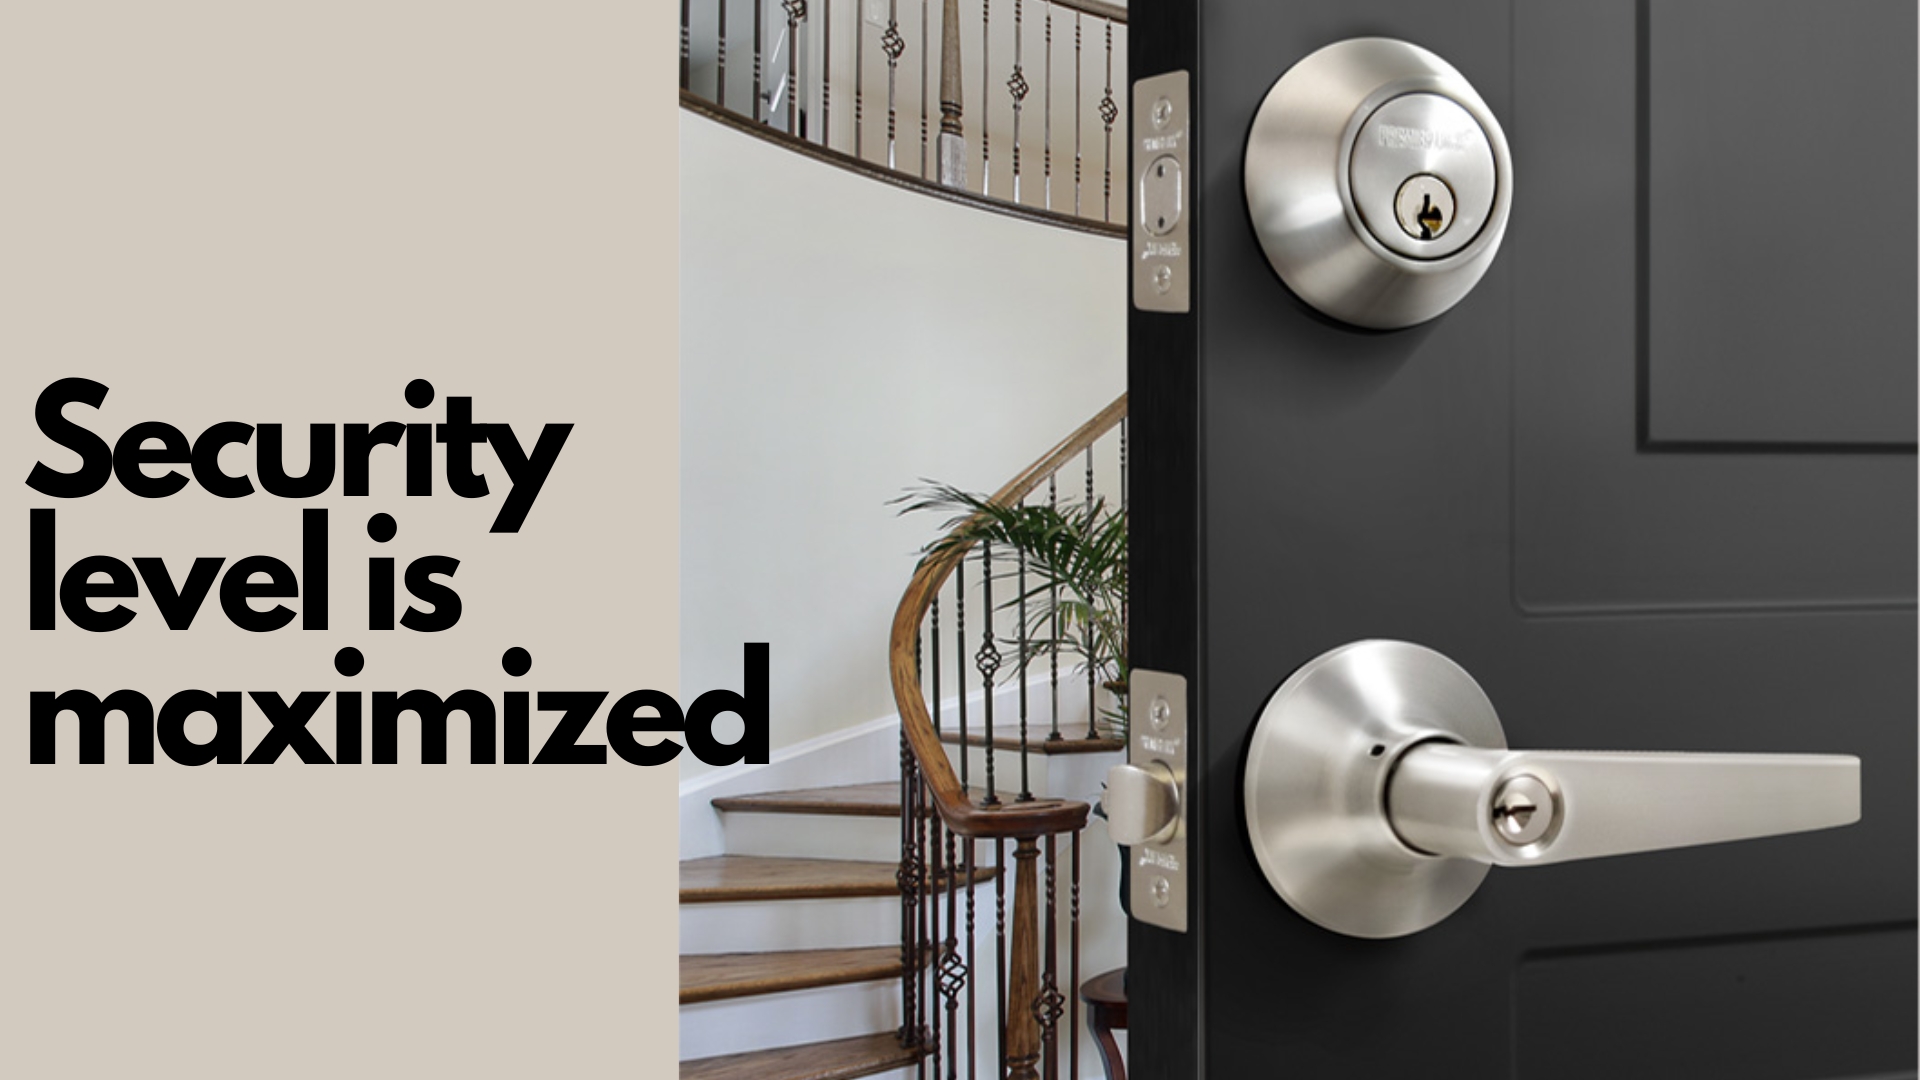 A set of rekeyable door locks for homes